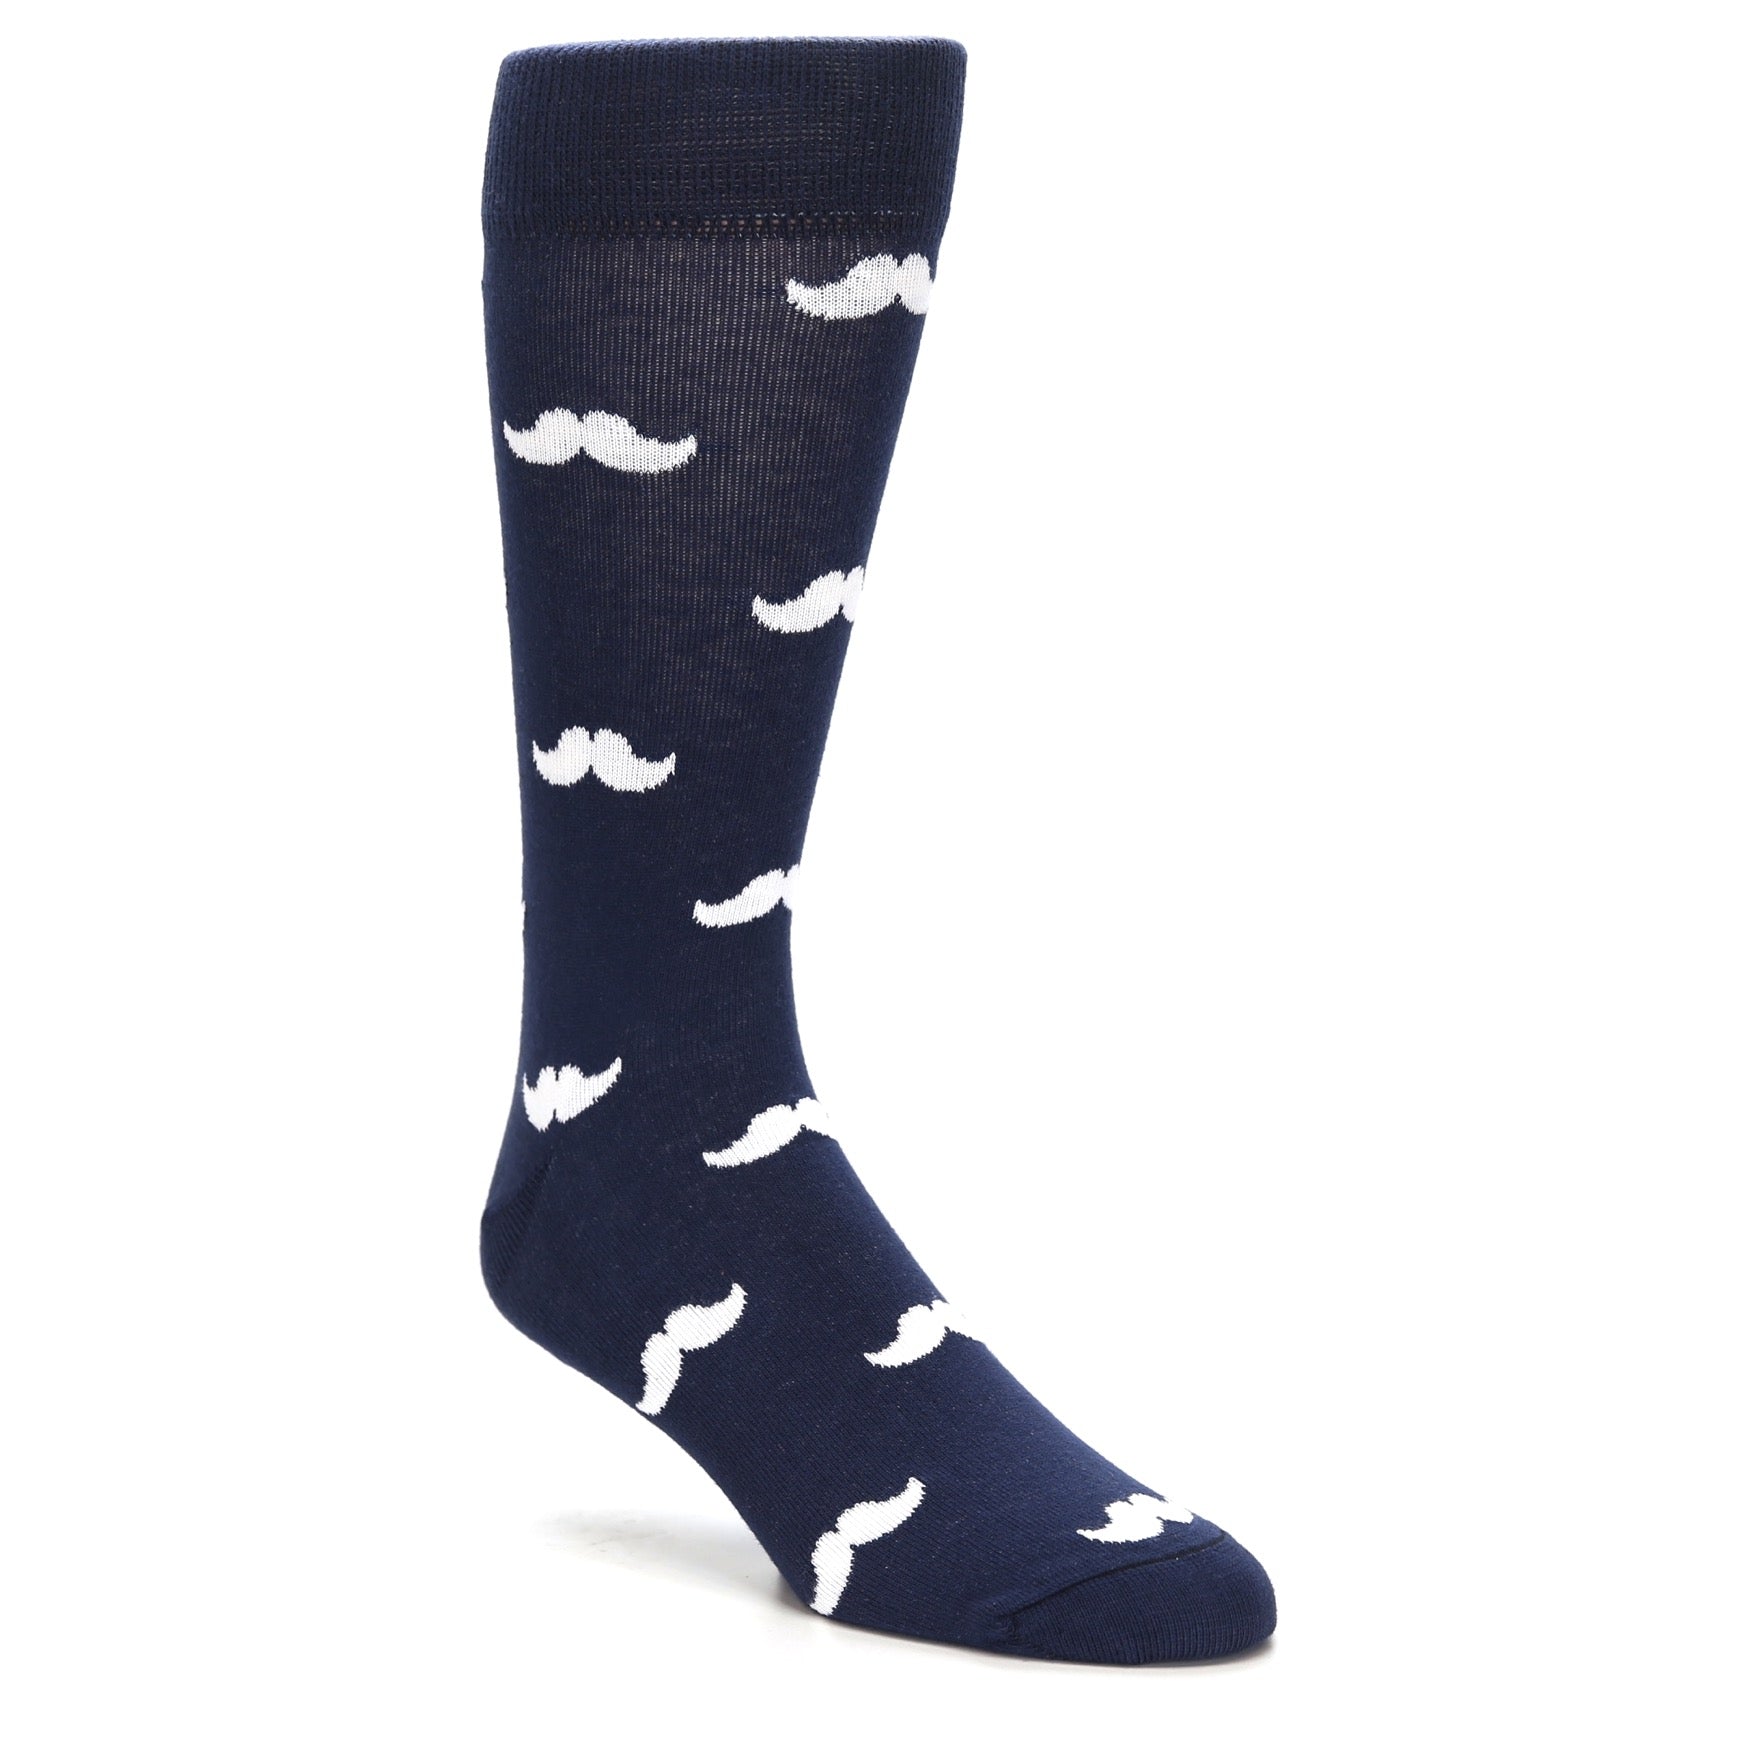 Navy Mustache Pattern - USA Made- Men's Dress Socks